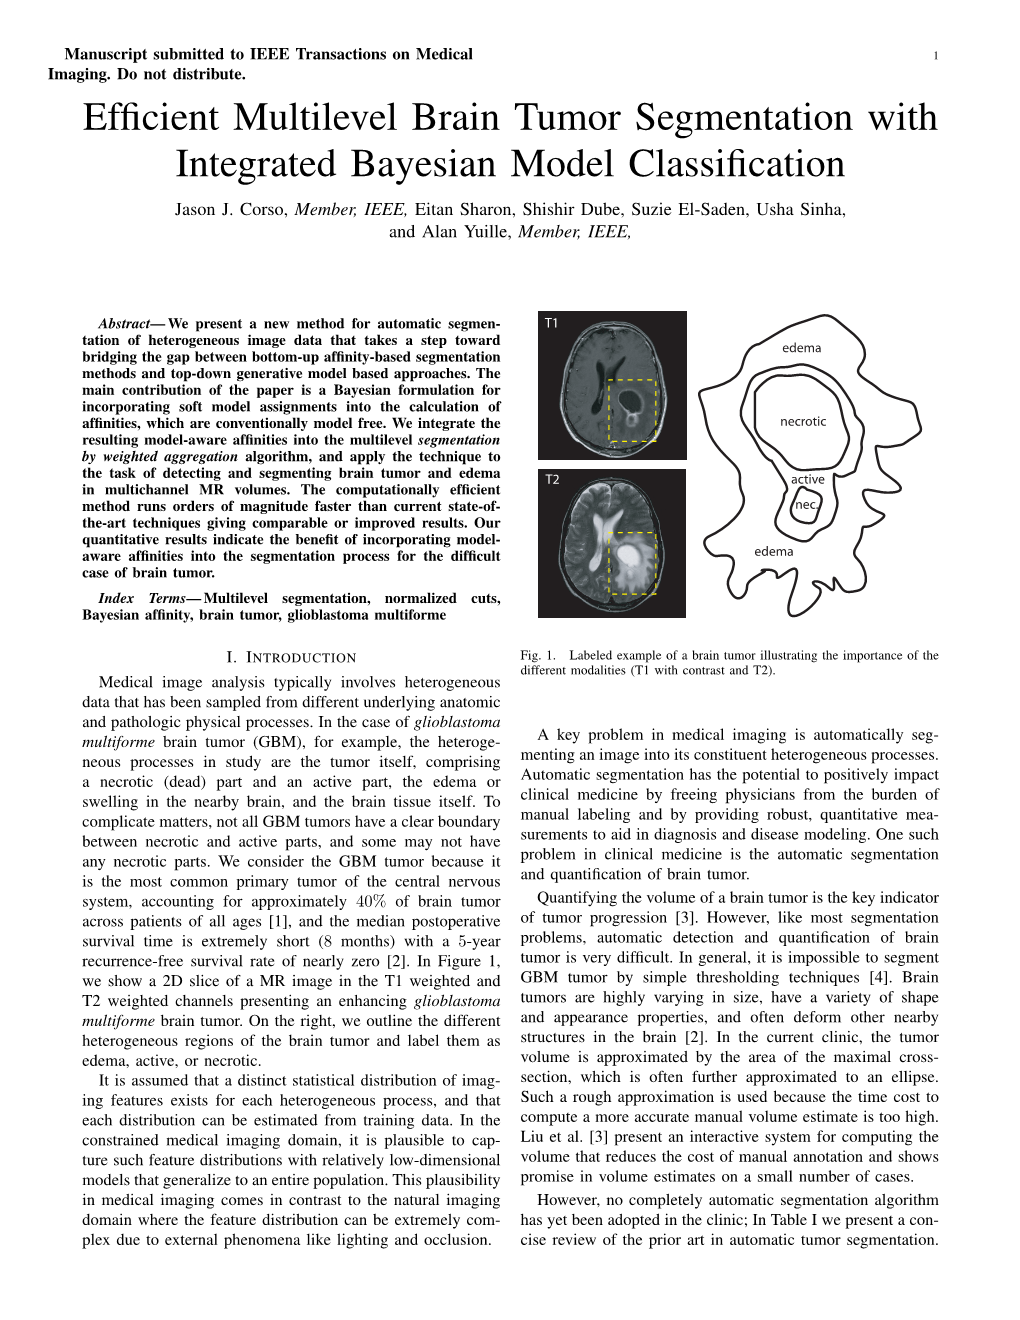 Efficient Multilevel Brain Tumor Segmentation with Integrated